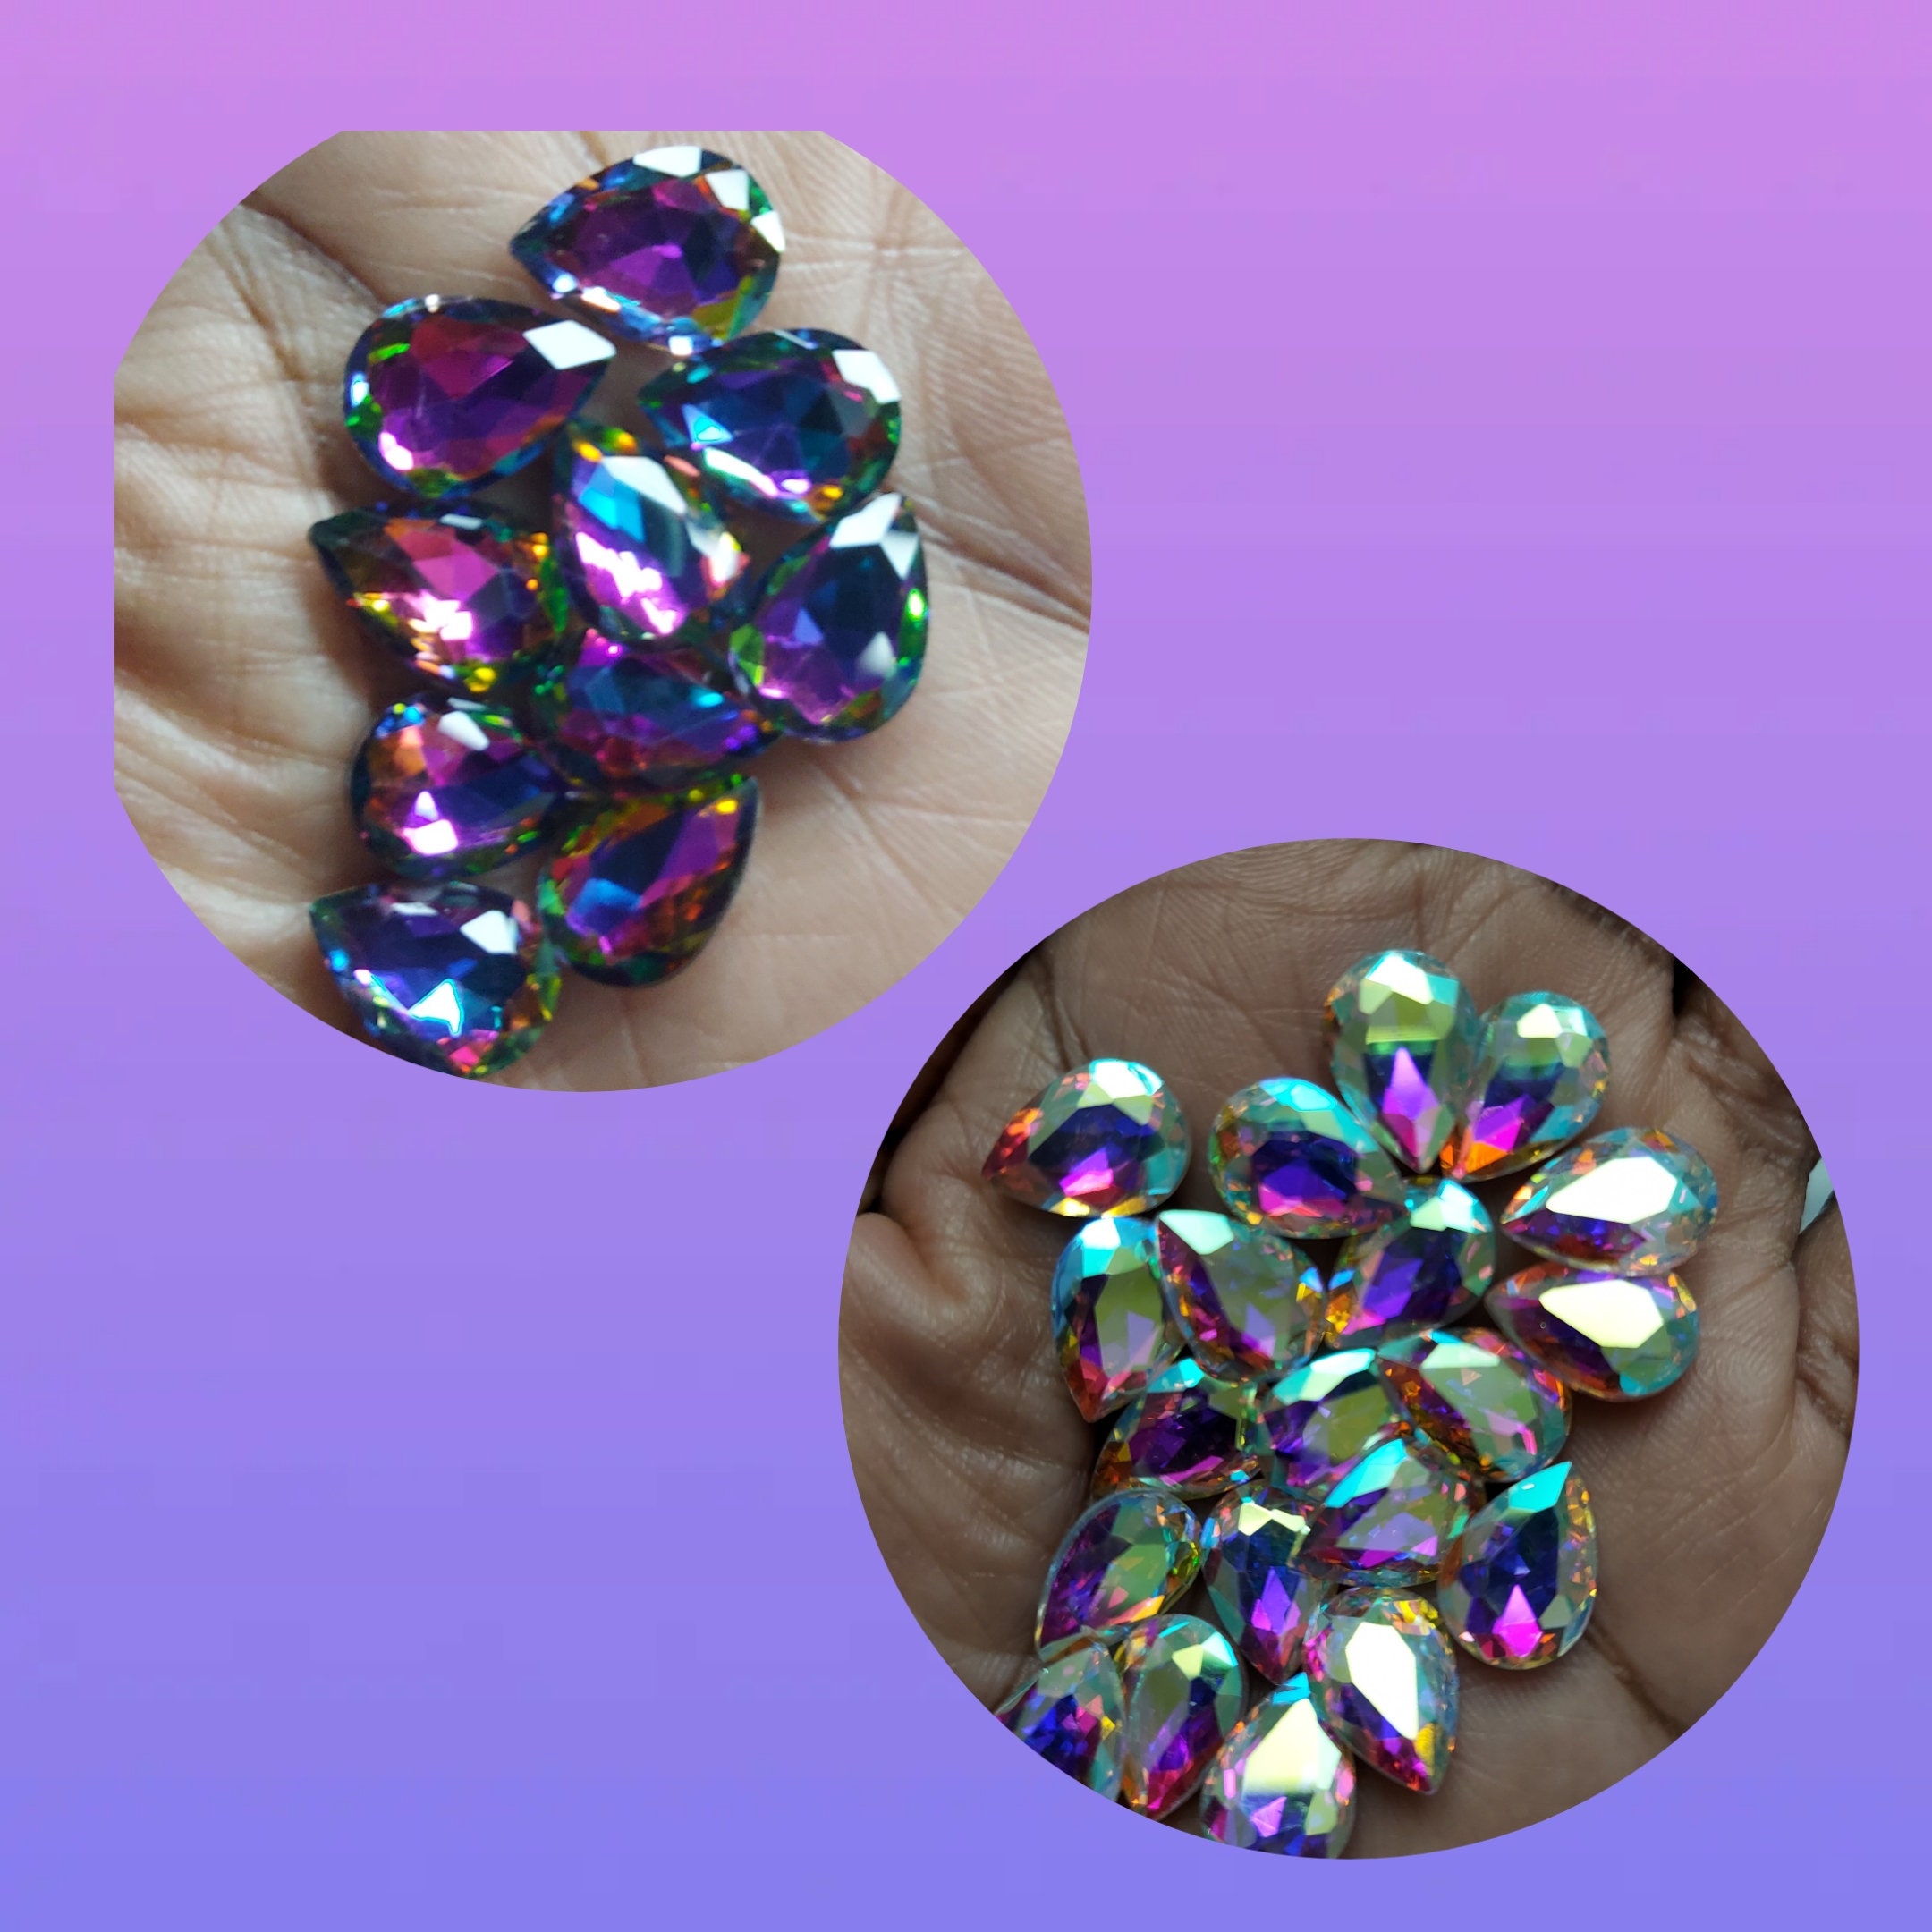 Massive Beads 144pcs Hotfix Quality Crystal Rhinestones Flatback Nail Art Pick Color (Crystal AB, 34ss 144pcs)